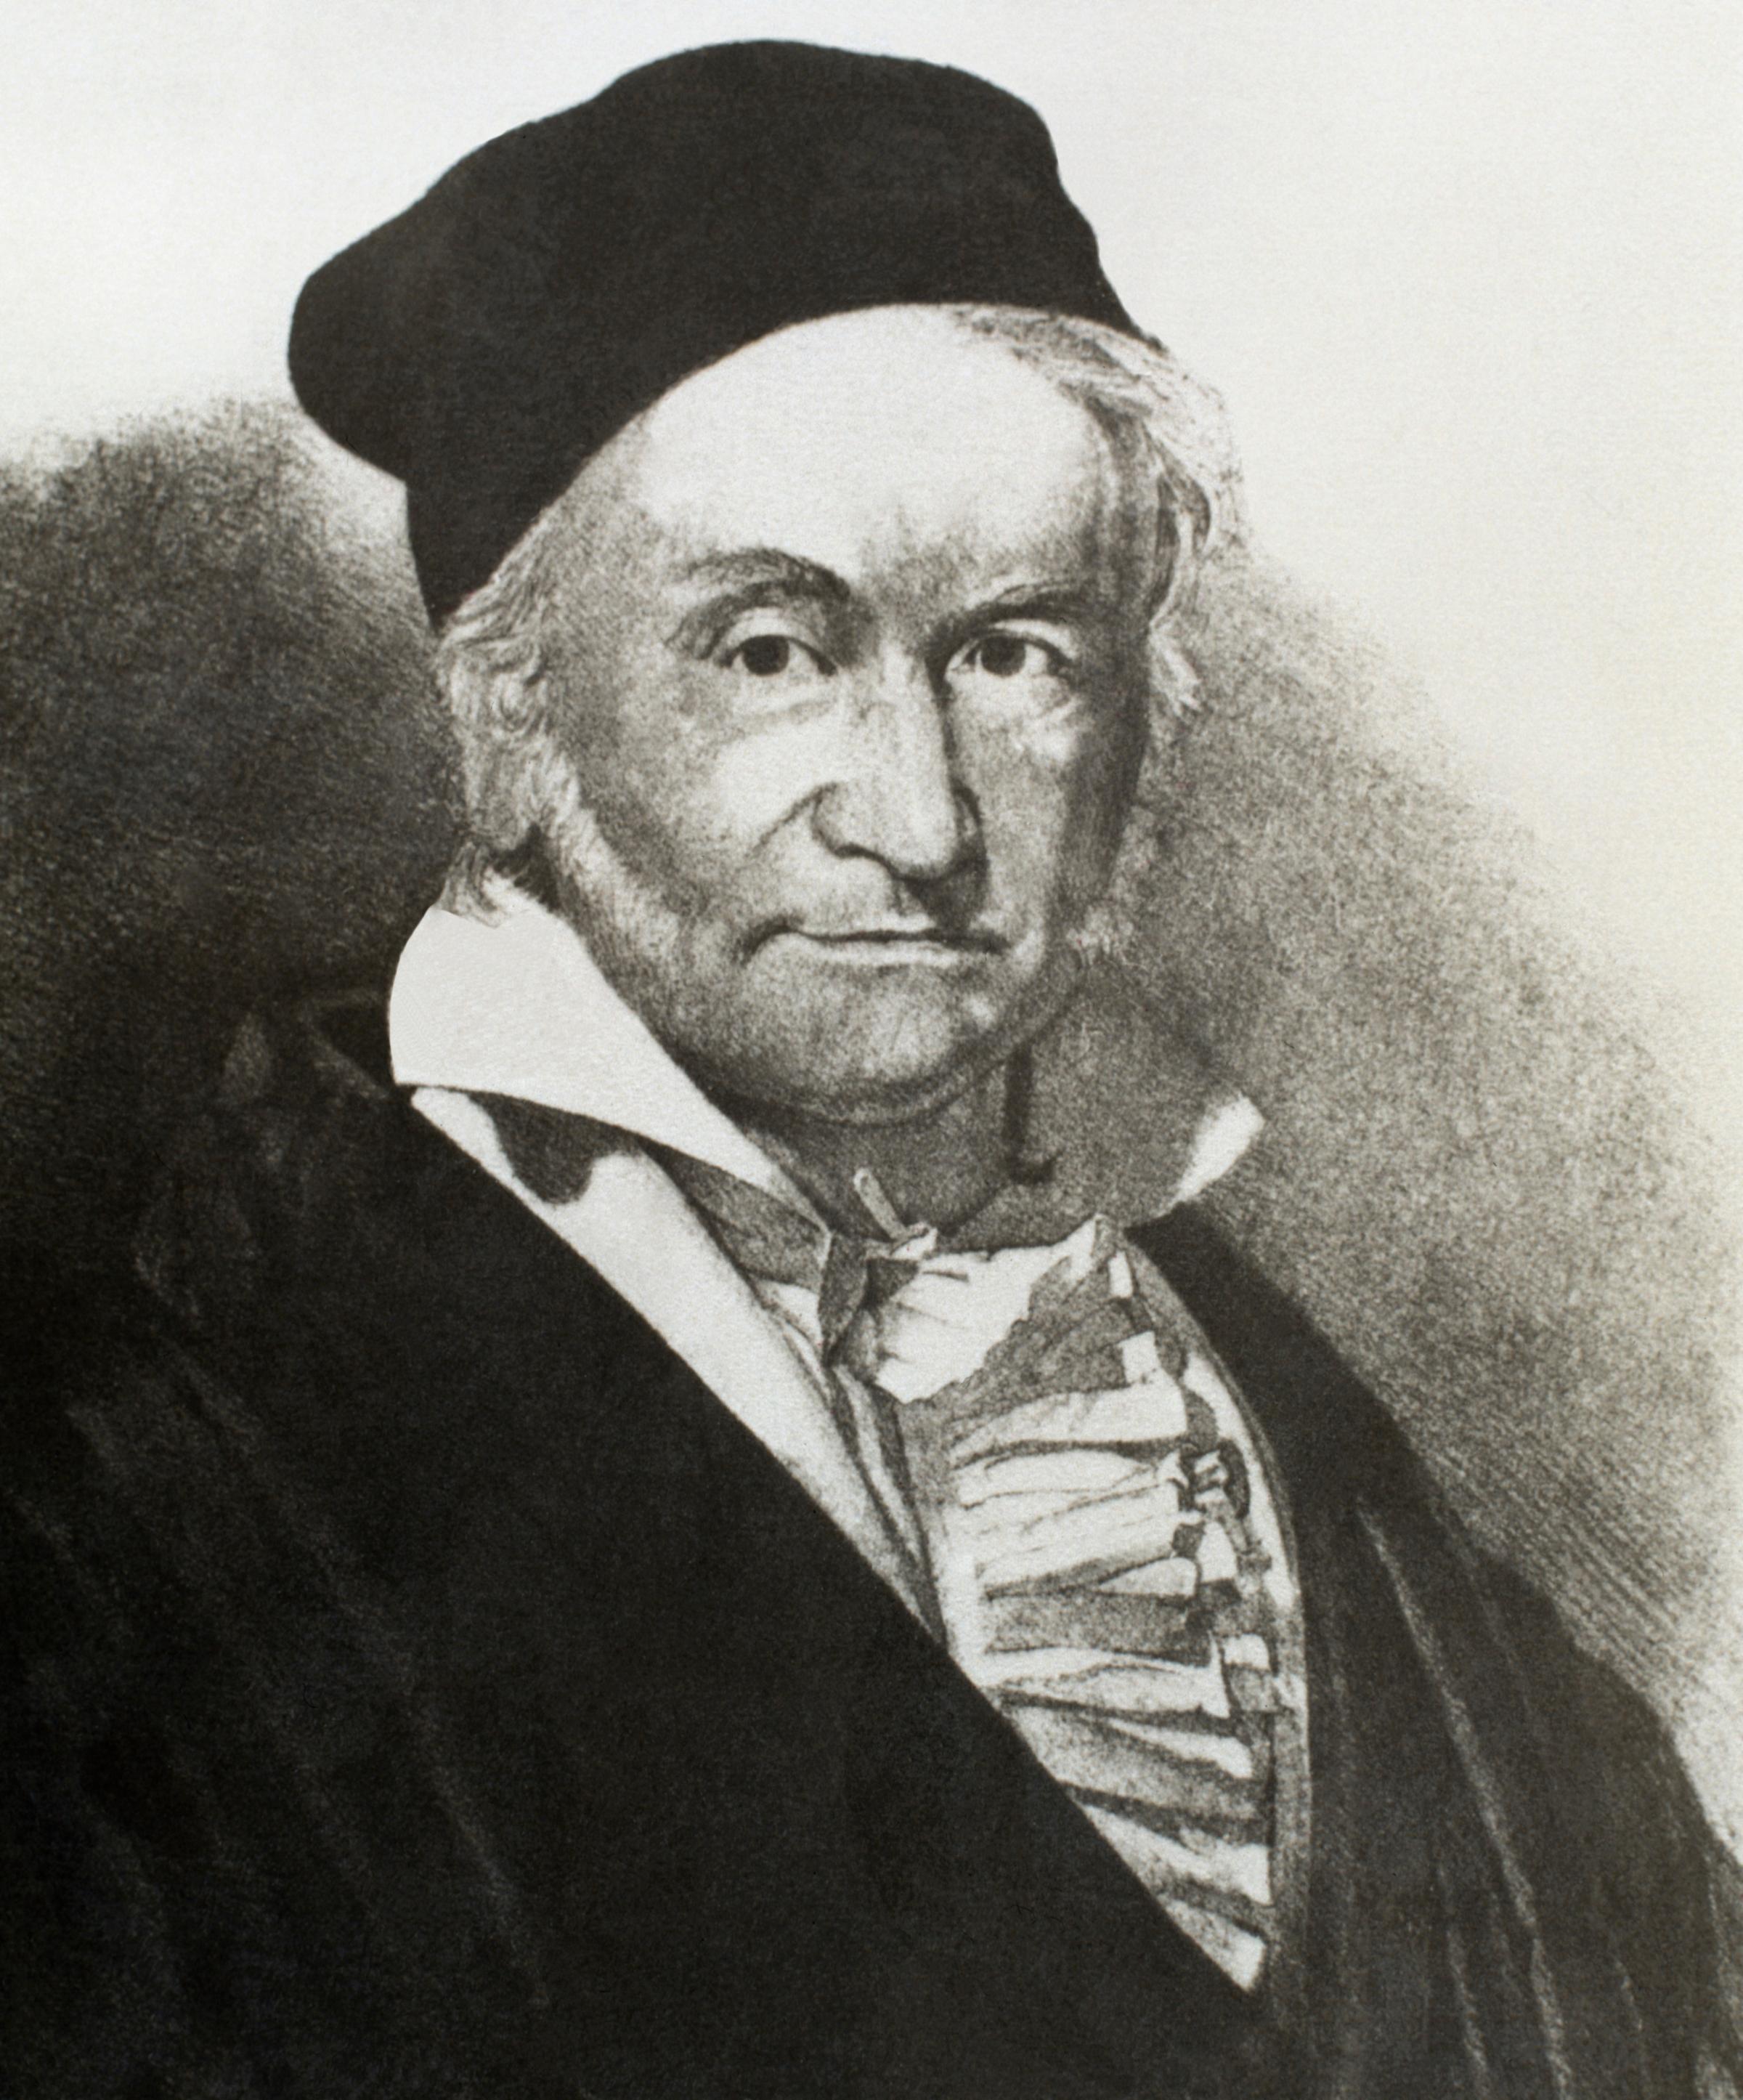 Carl Friedrich Gauss (1777-1855). German mathematician. Engraving. 19th century.